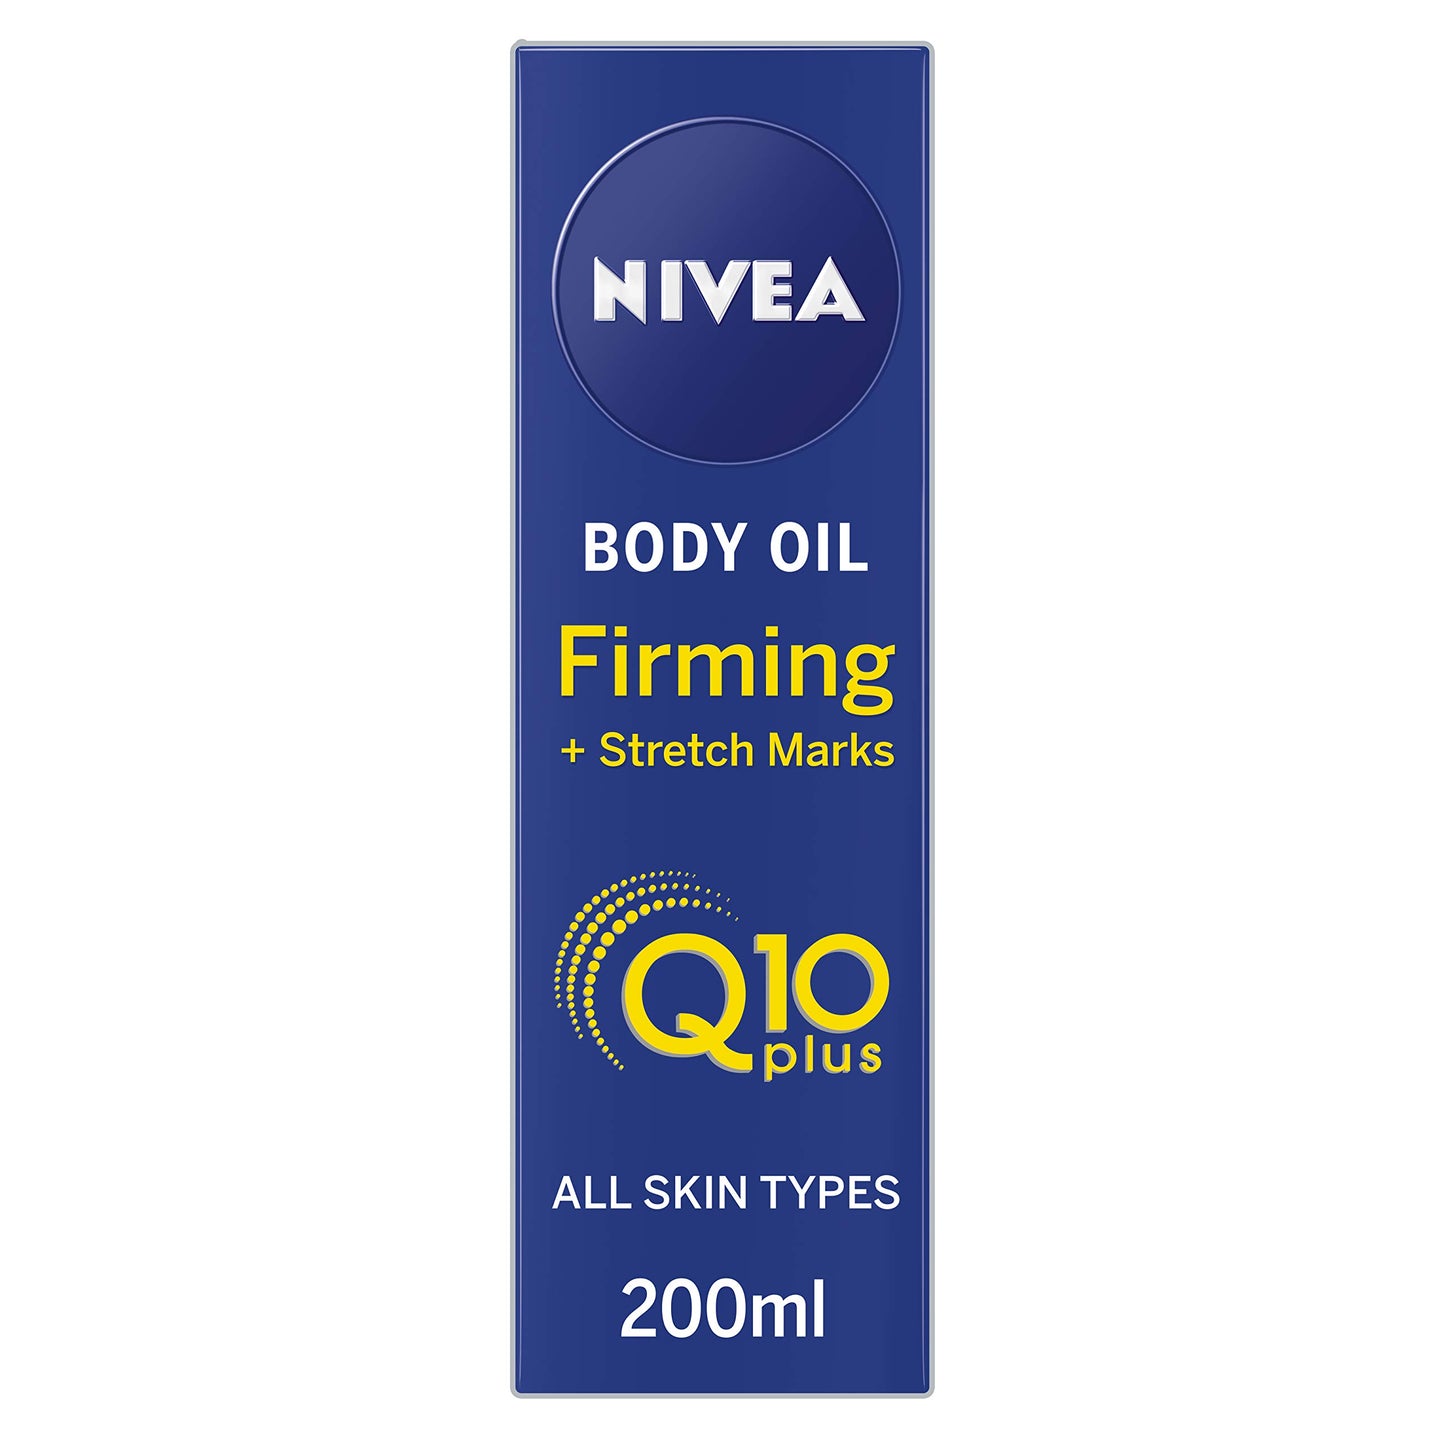 NIVEA Q10 FIRMING + STRETCH MARKS BODY OIL